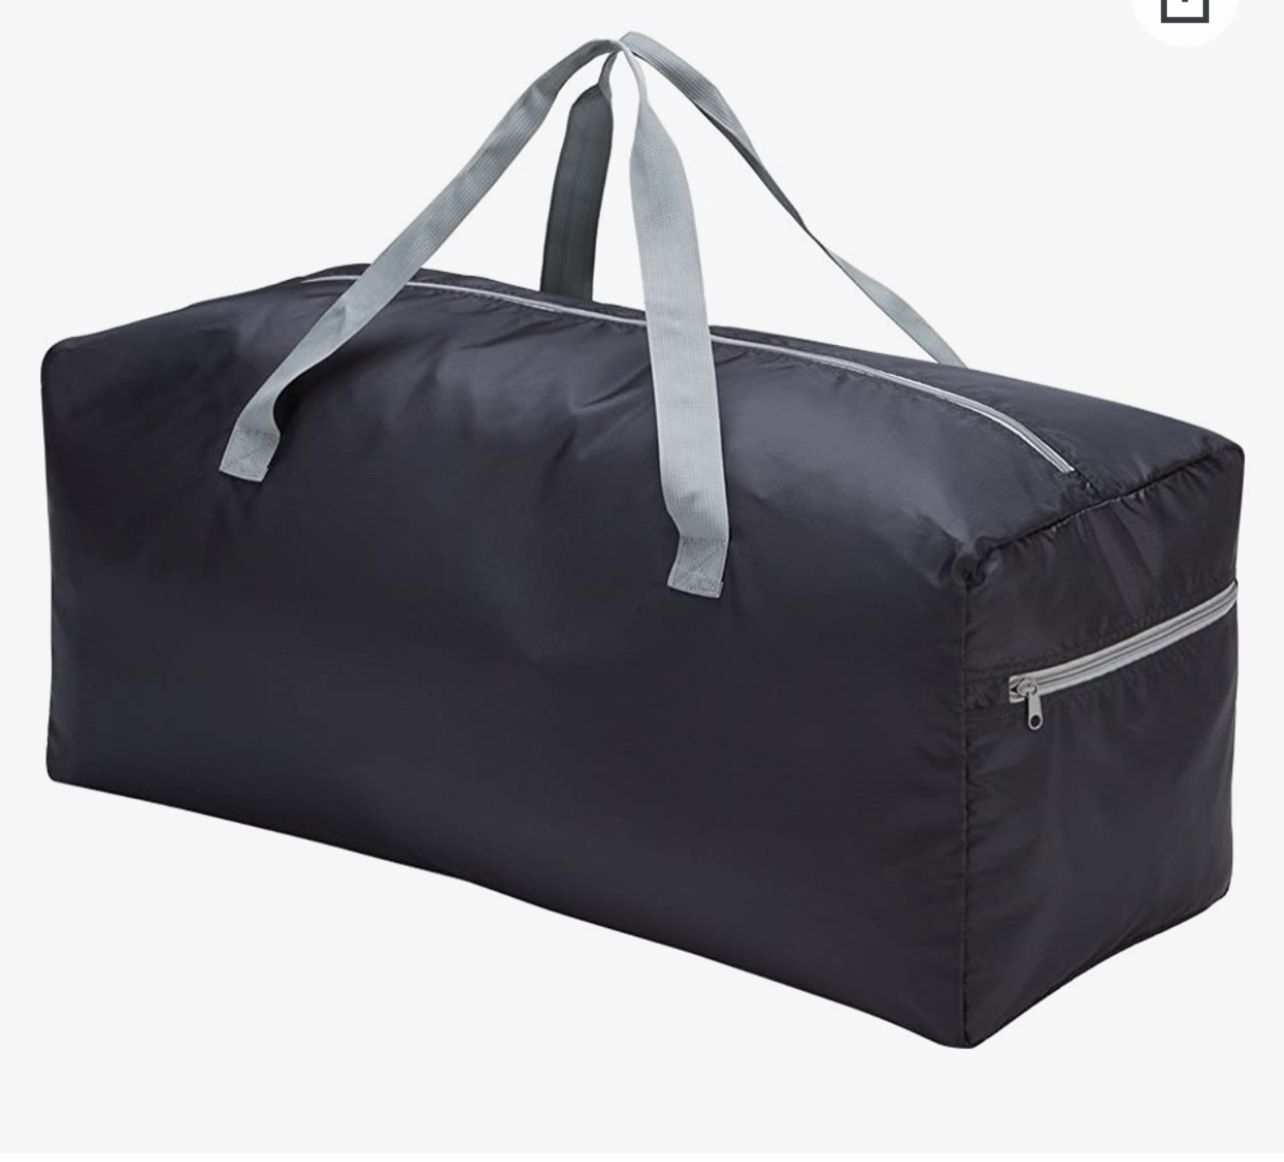 30” Packable Duffle Bag 